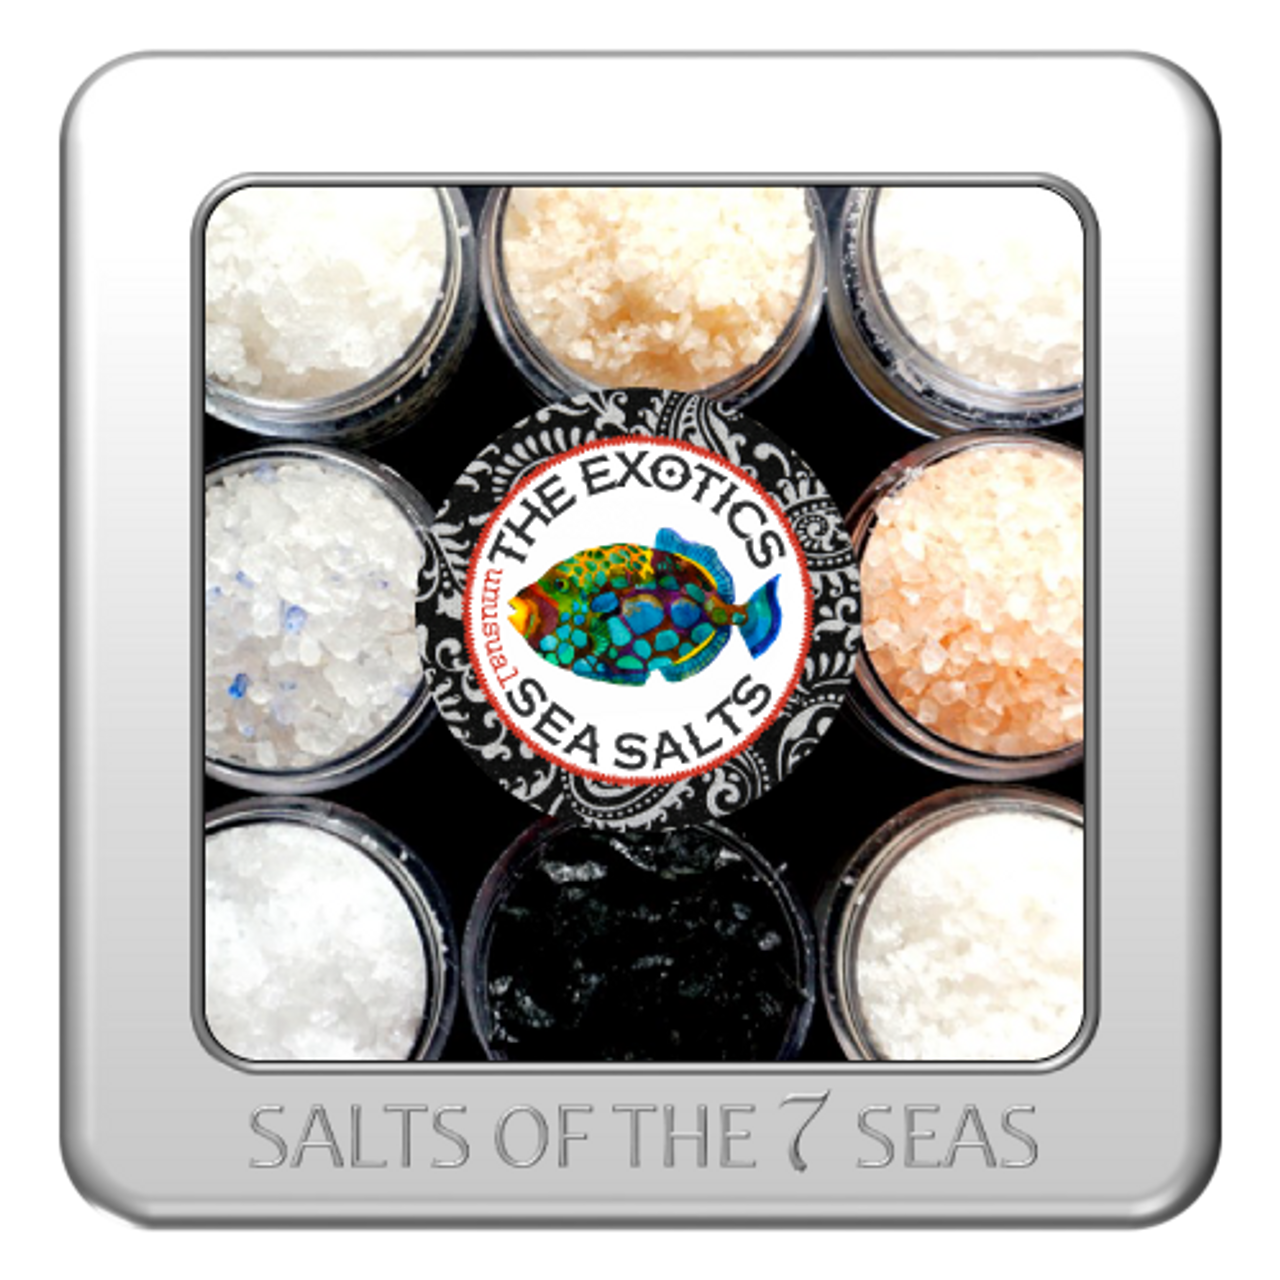 https://cdn11.bigcommerce.com/s-g5oquf4l8o/images/stencil/1280x1280/products/121/517/salts-of-the-7-seas-samplers-2018-exotics-gourmet-sea-salts_1__95878.1689860486.png?c=1